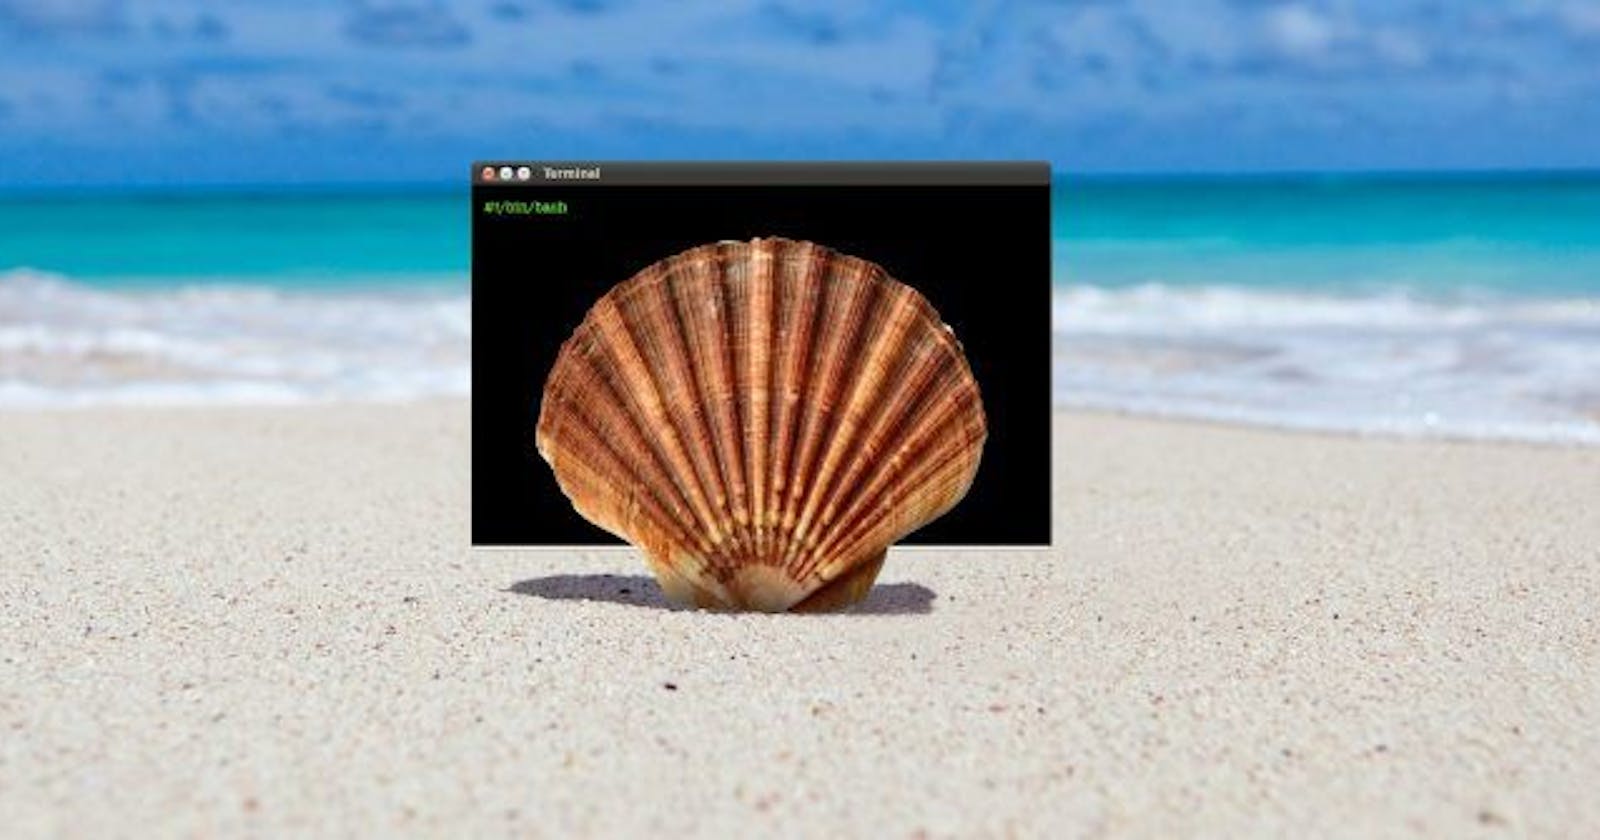 Basic Linux Shell Scripting for DevOps Engineers